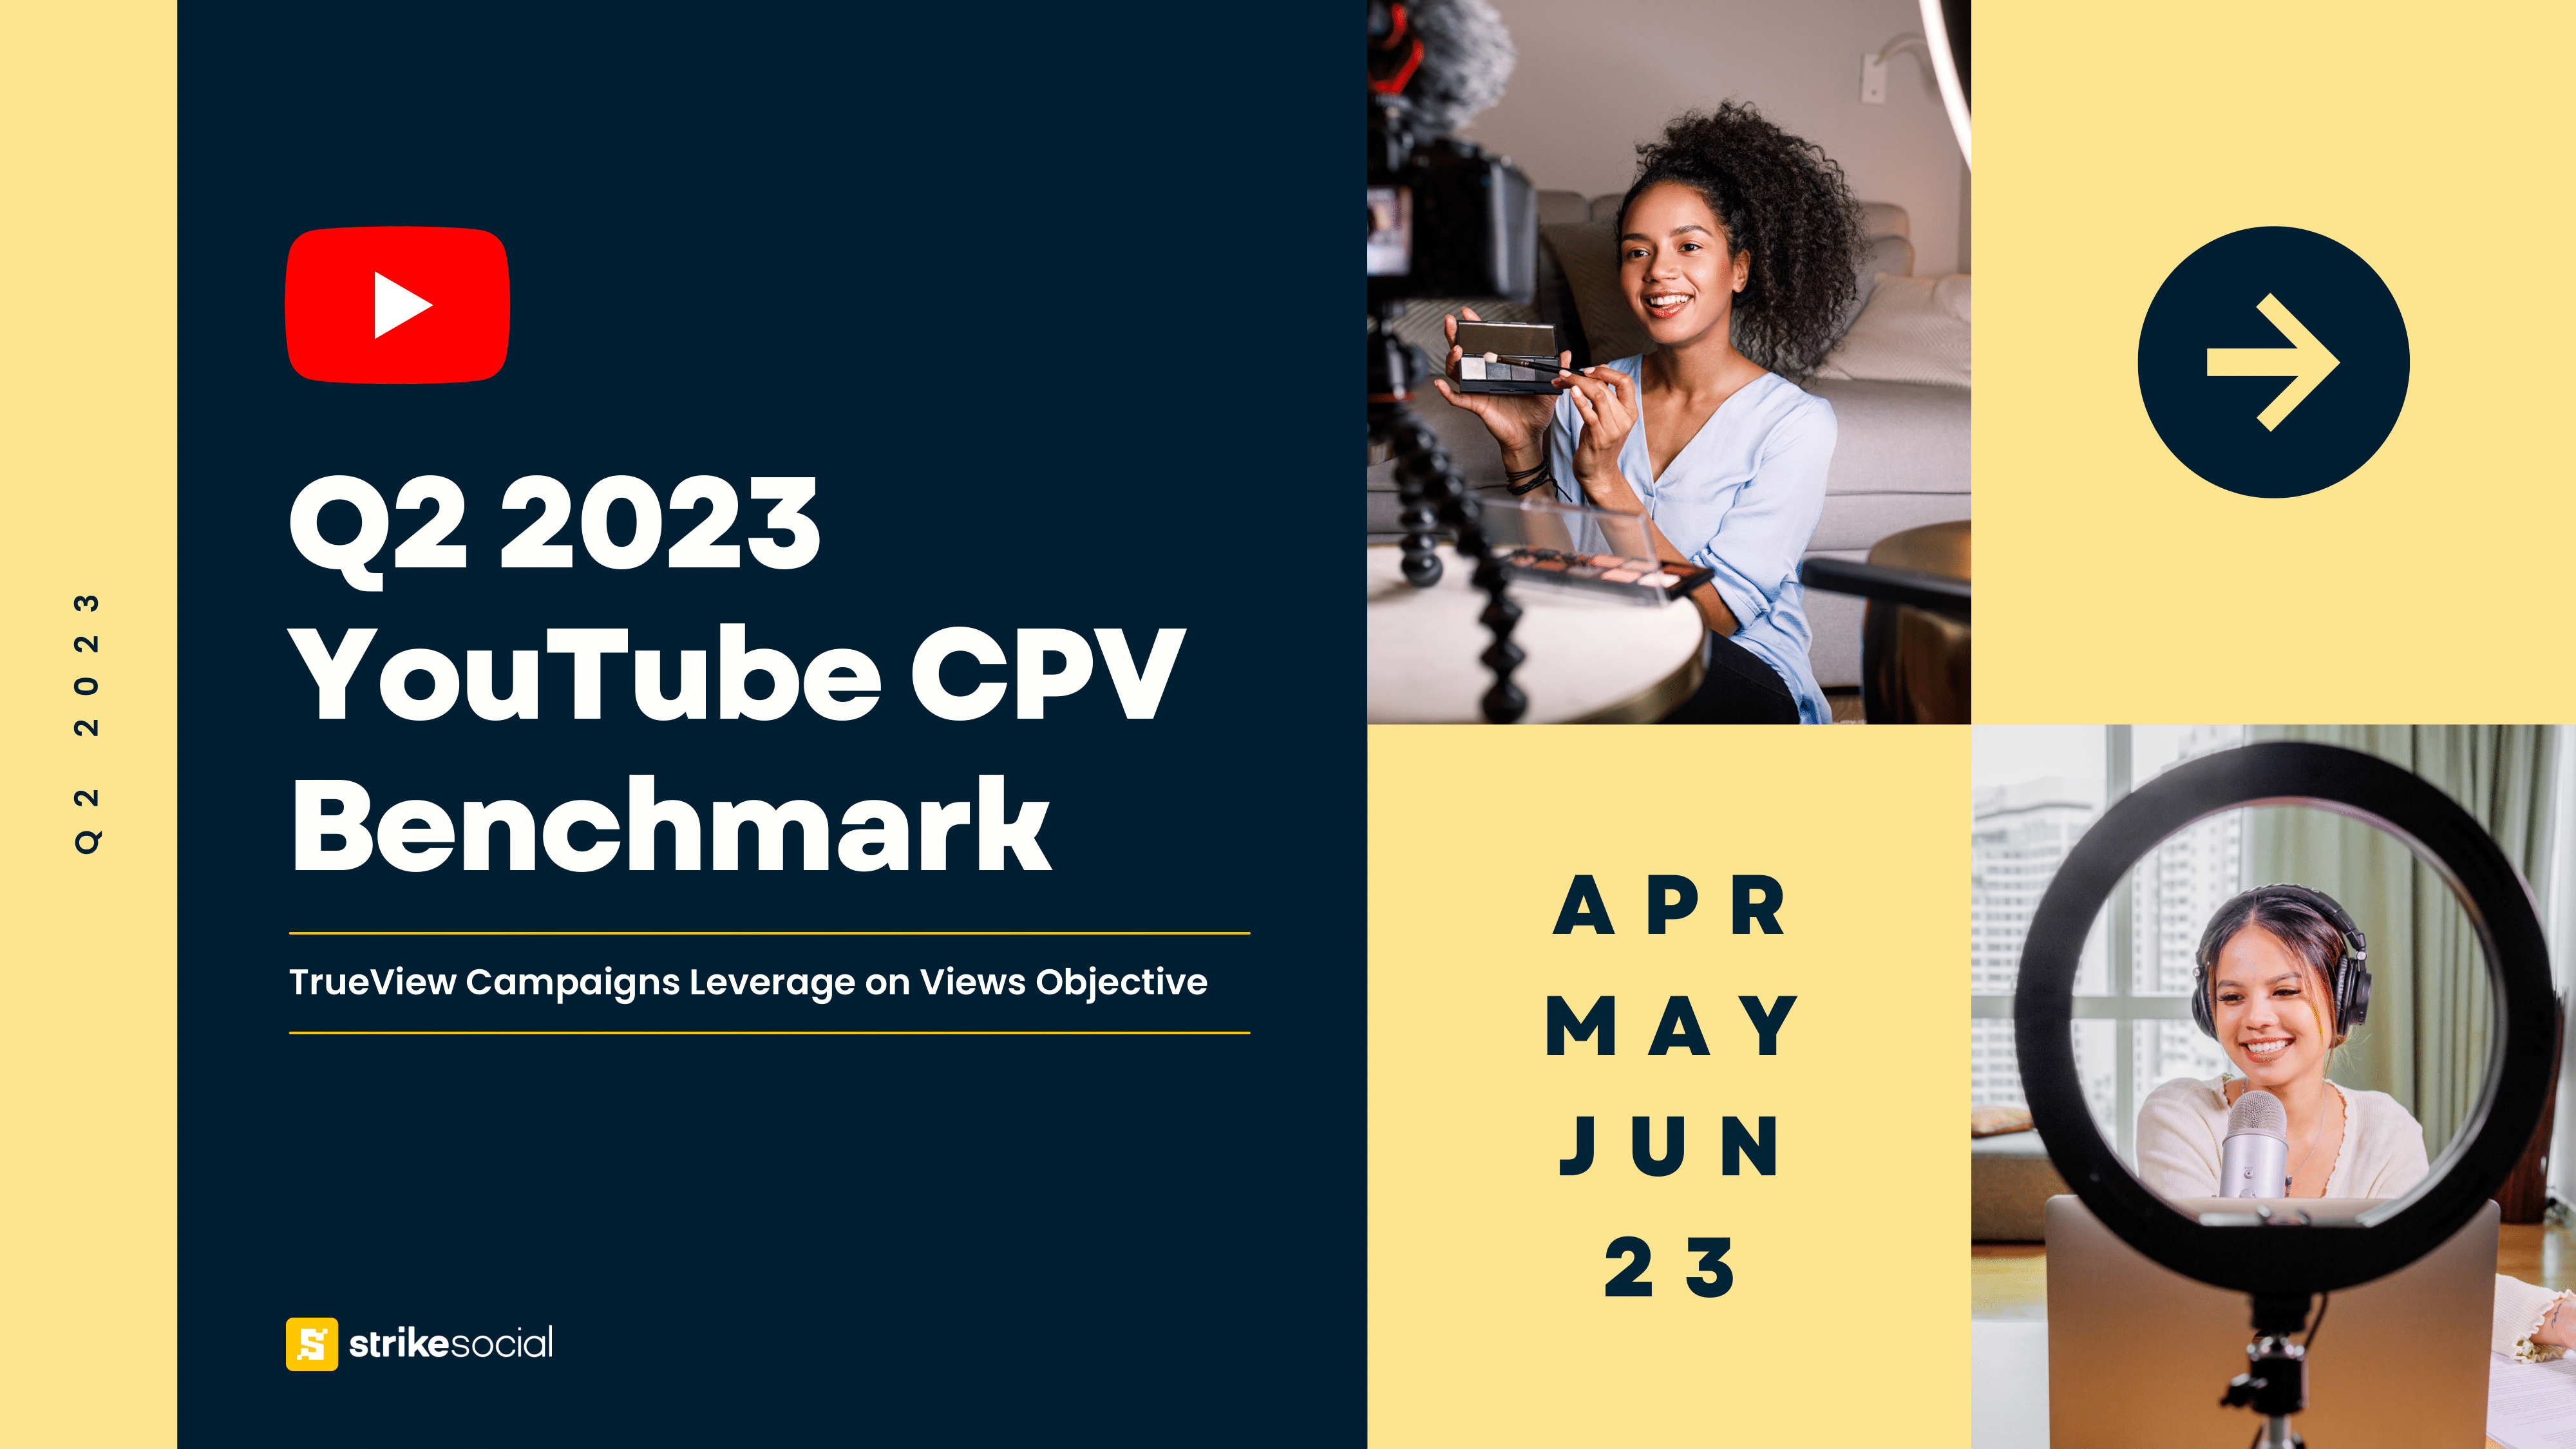 Q2 2023 YouTube CPV Benchmark Strike Social Header